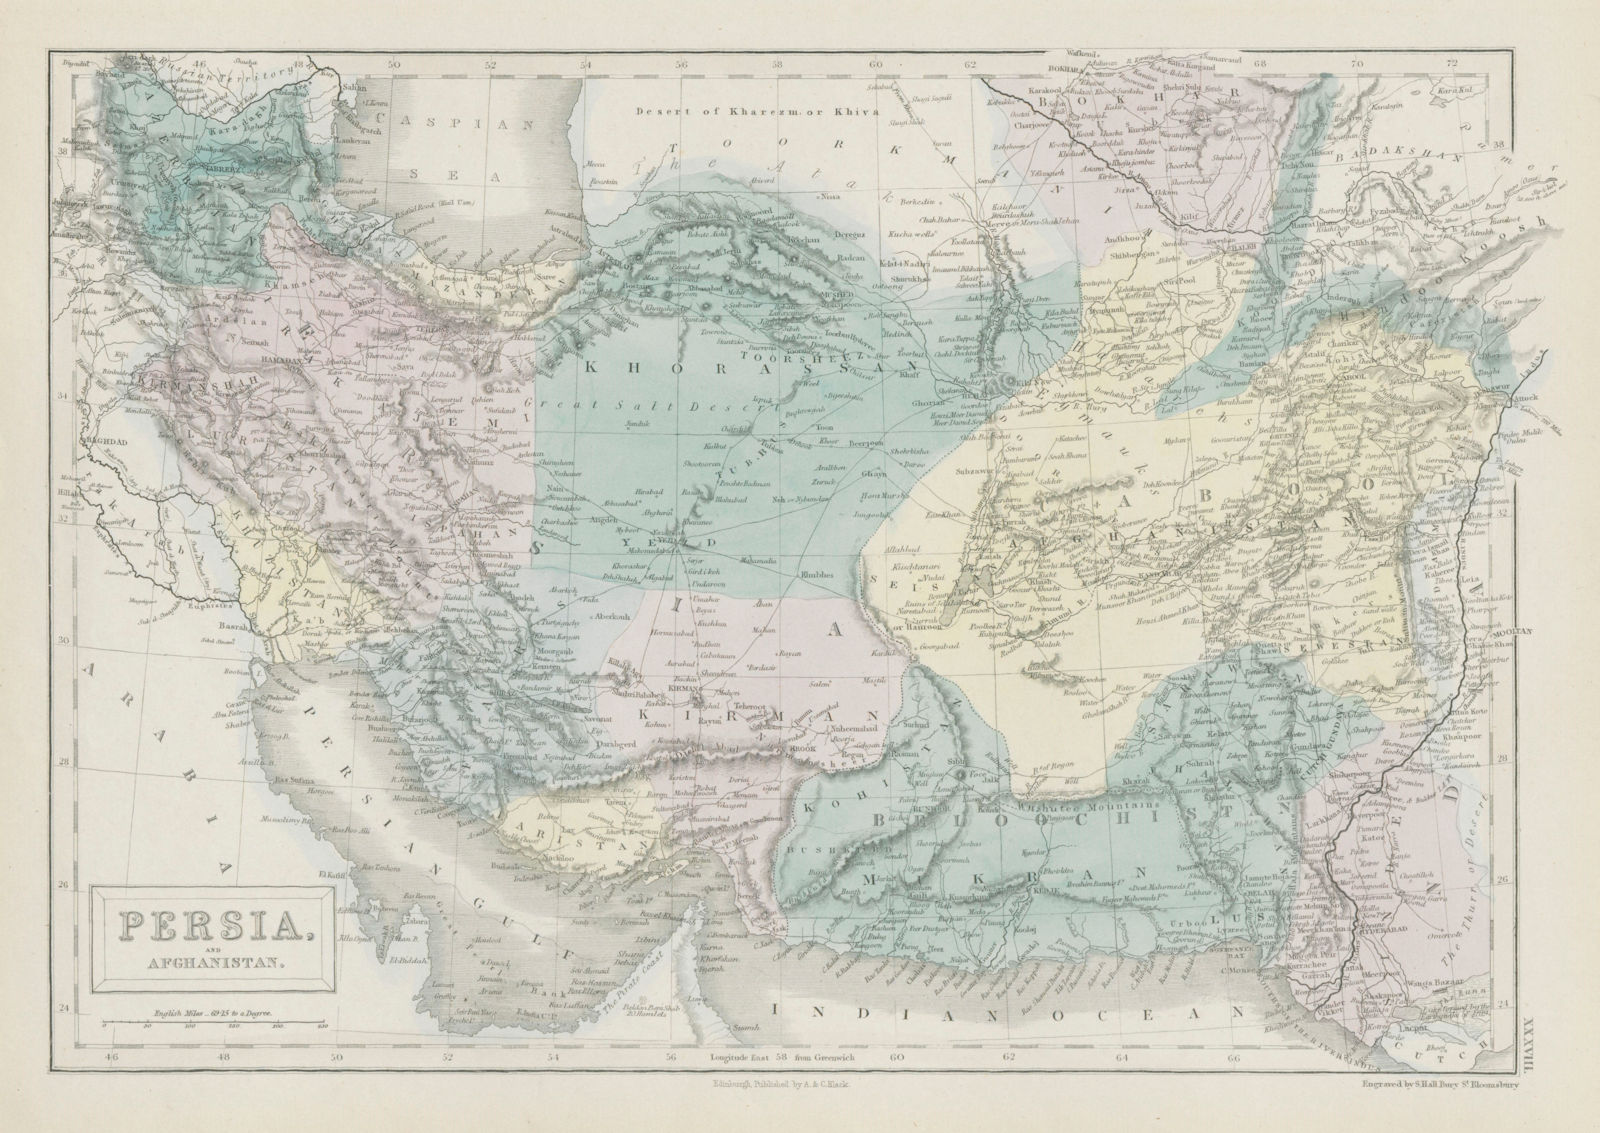 Persia & Afghanistan. Iran SW Asia Pirate Coast 'Debai' (Dubai) HALL 1856 map